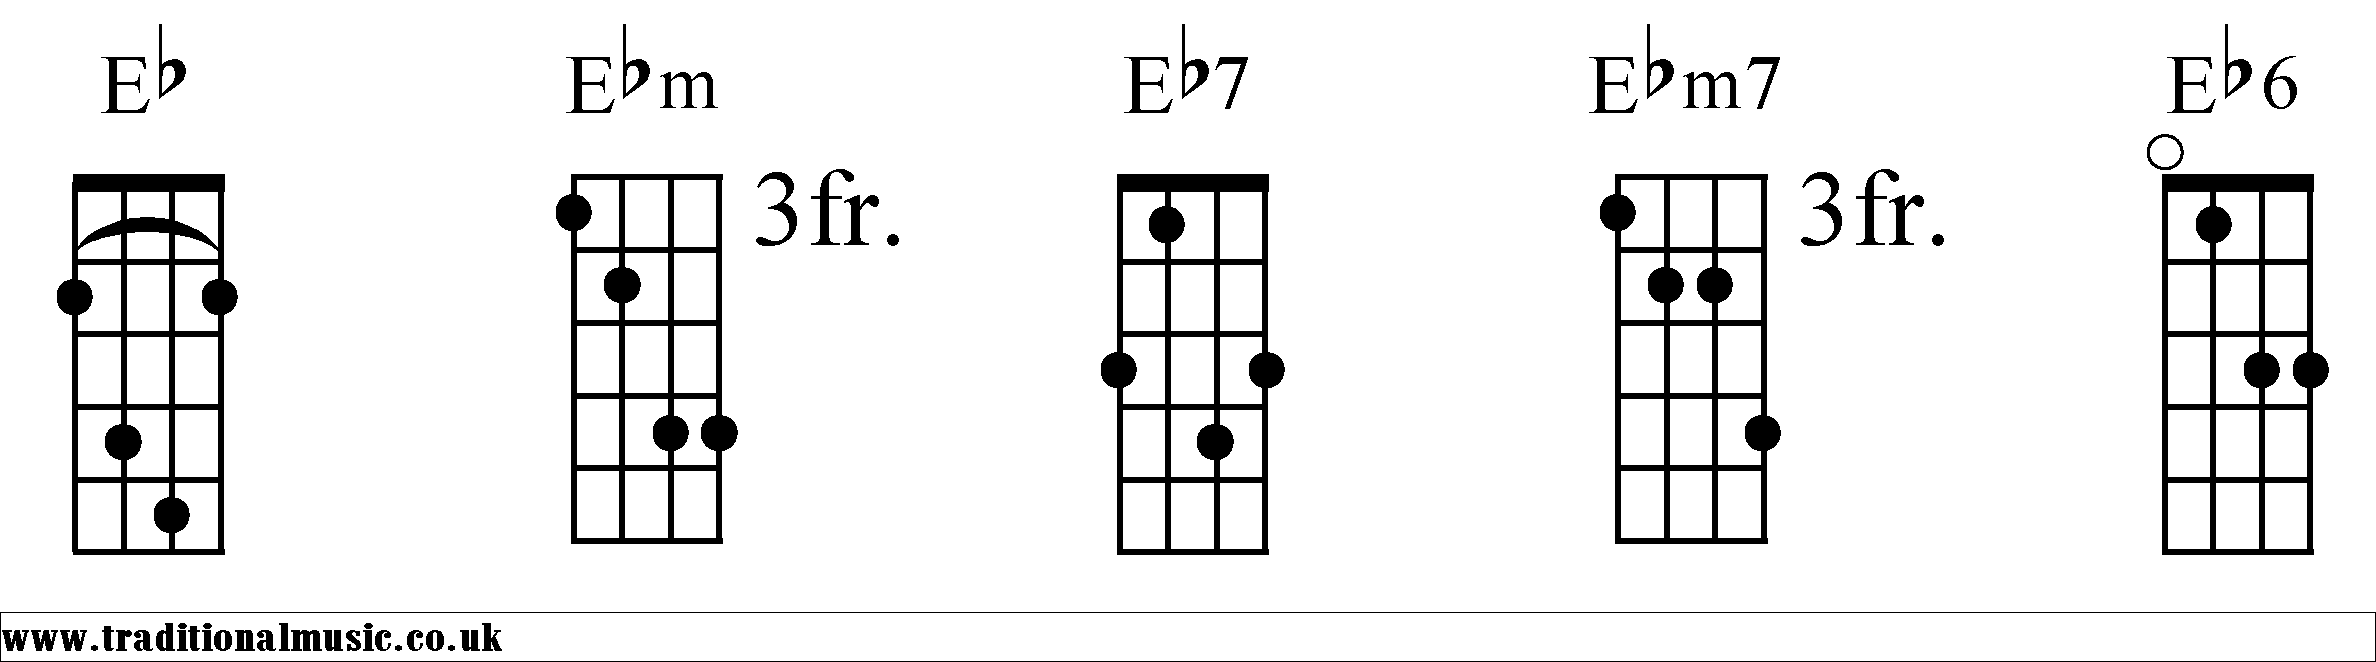 Eb Chords diagrams Mandolin 1